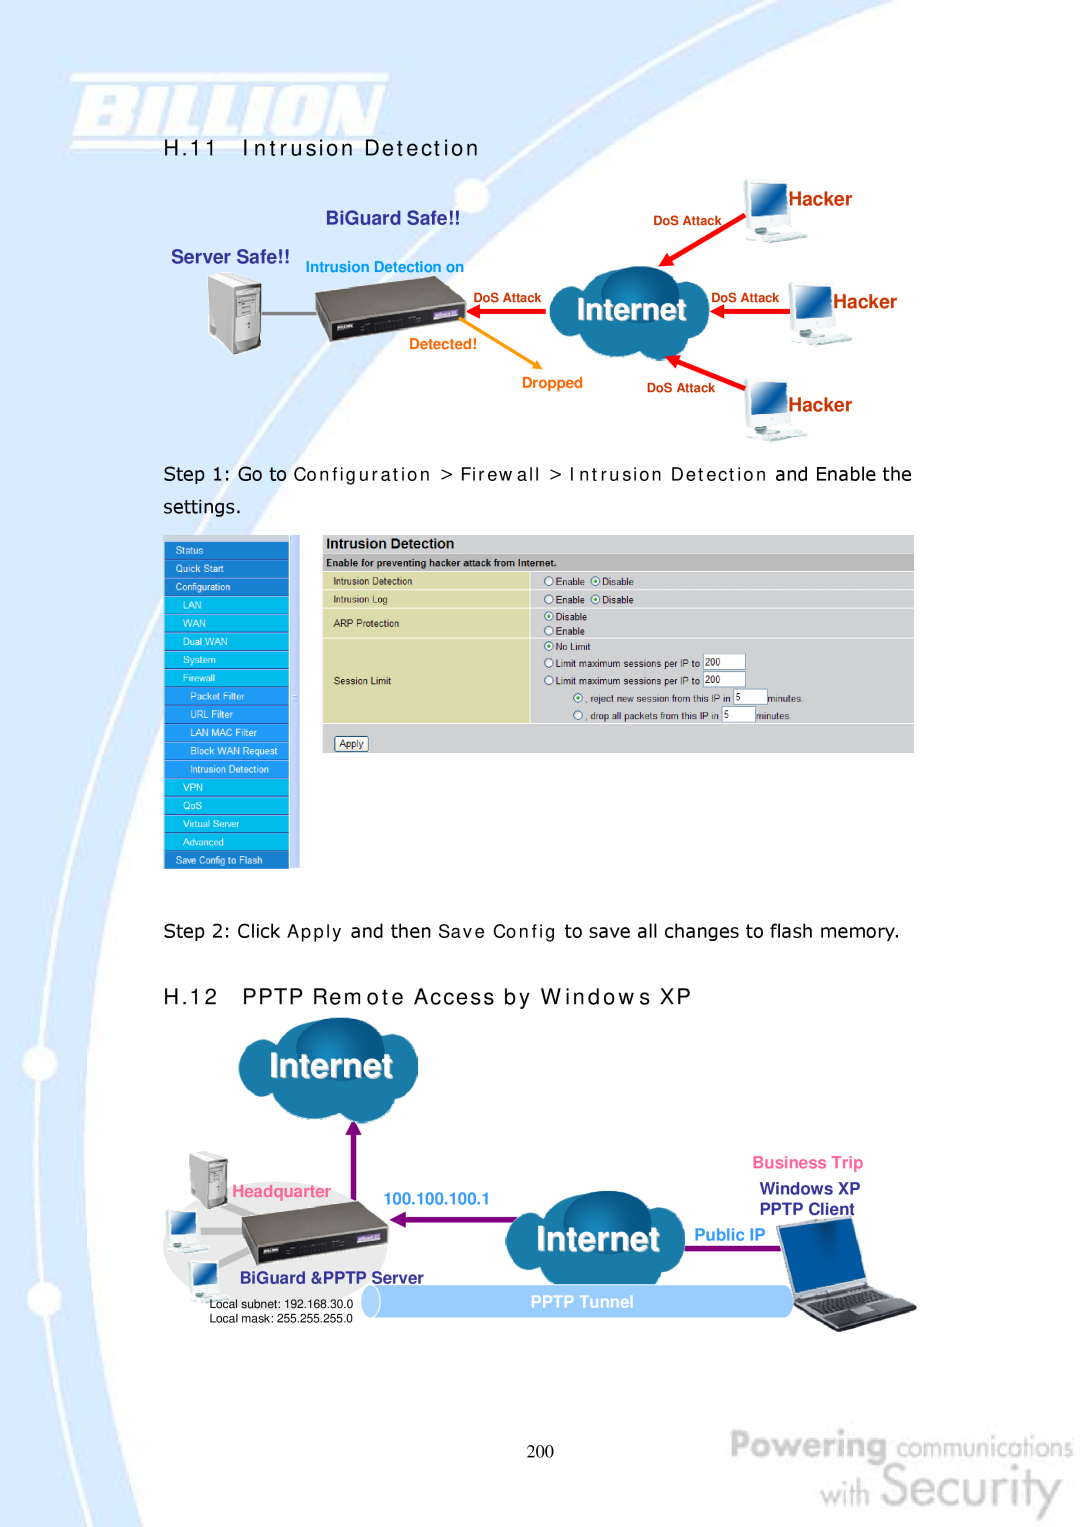 Billion Electric Company 30 H.11 Intrusion Detection, Internet, H.12 PPTP Remote Access by Windows XP, Hacker, Headquarter 